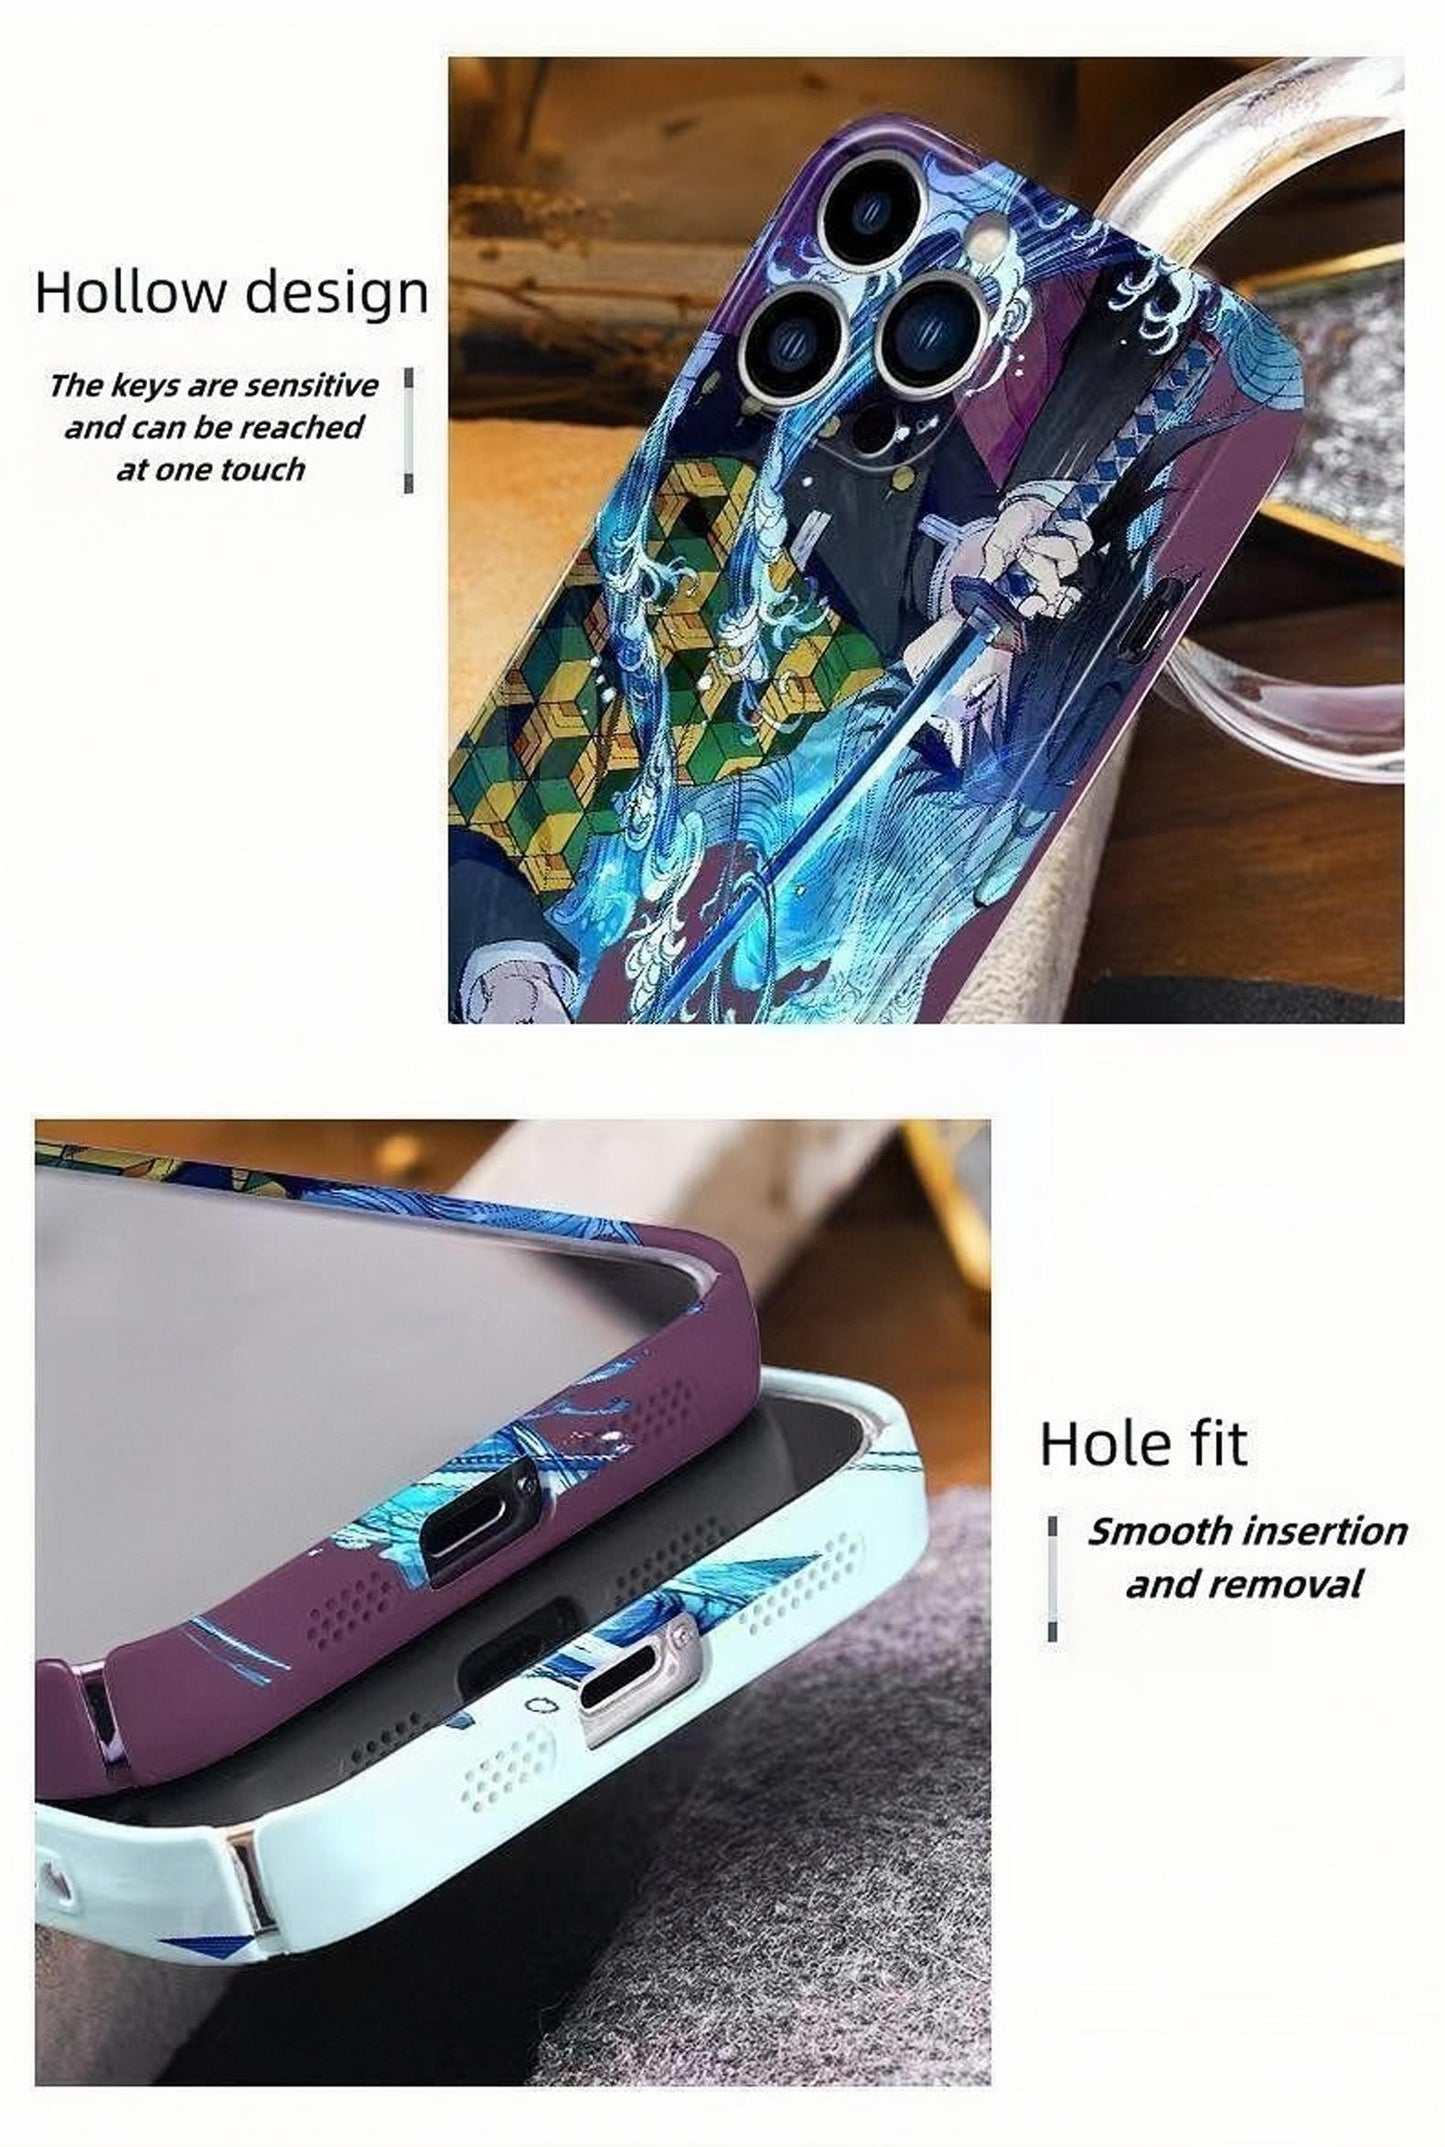 giyuu/shinobu Apple silicone crash-resistant phone case